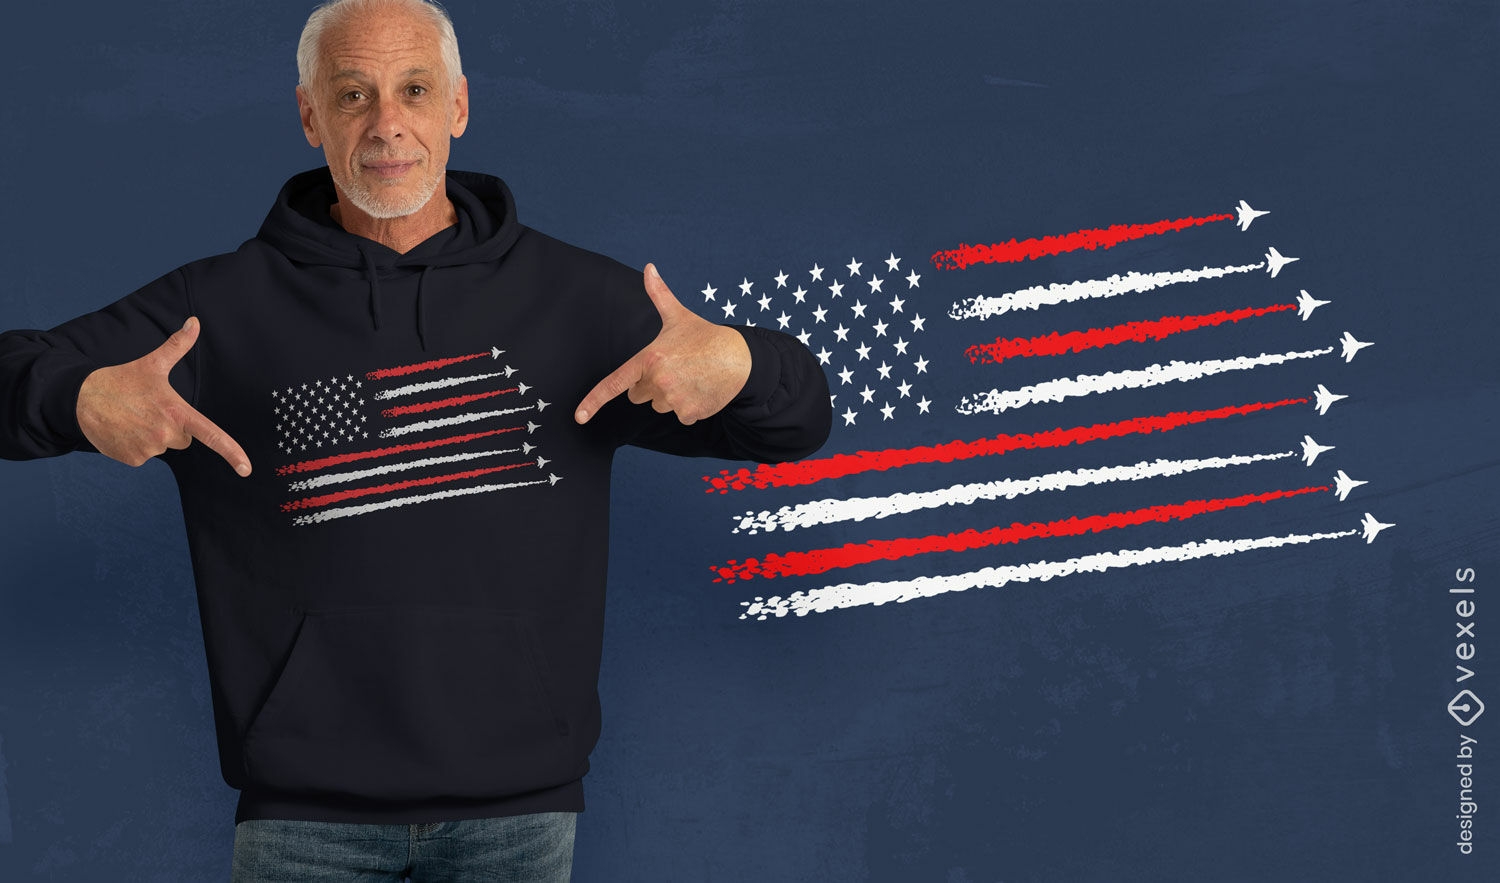 American flag arrows t-shirt design